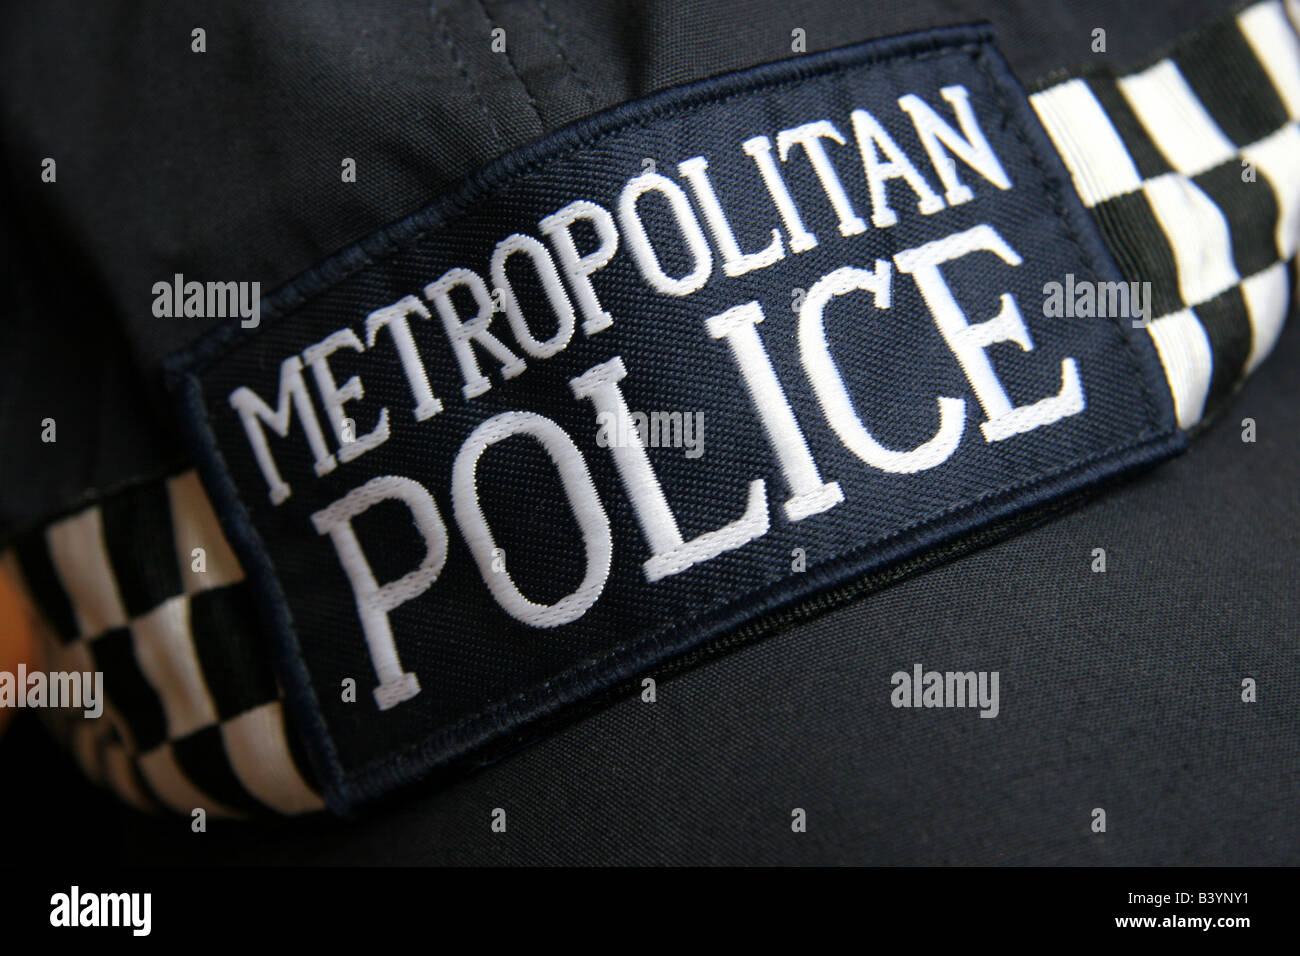 London Metropolitan Police firearms officers baseball cap Stock Photo